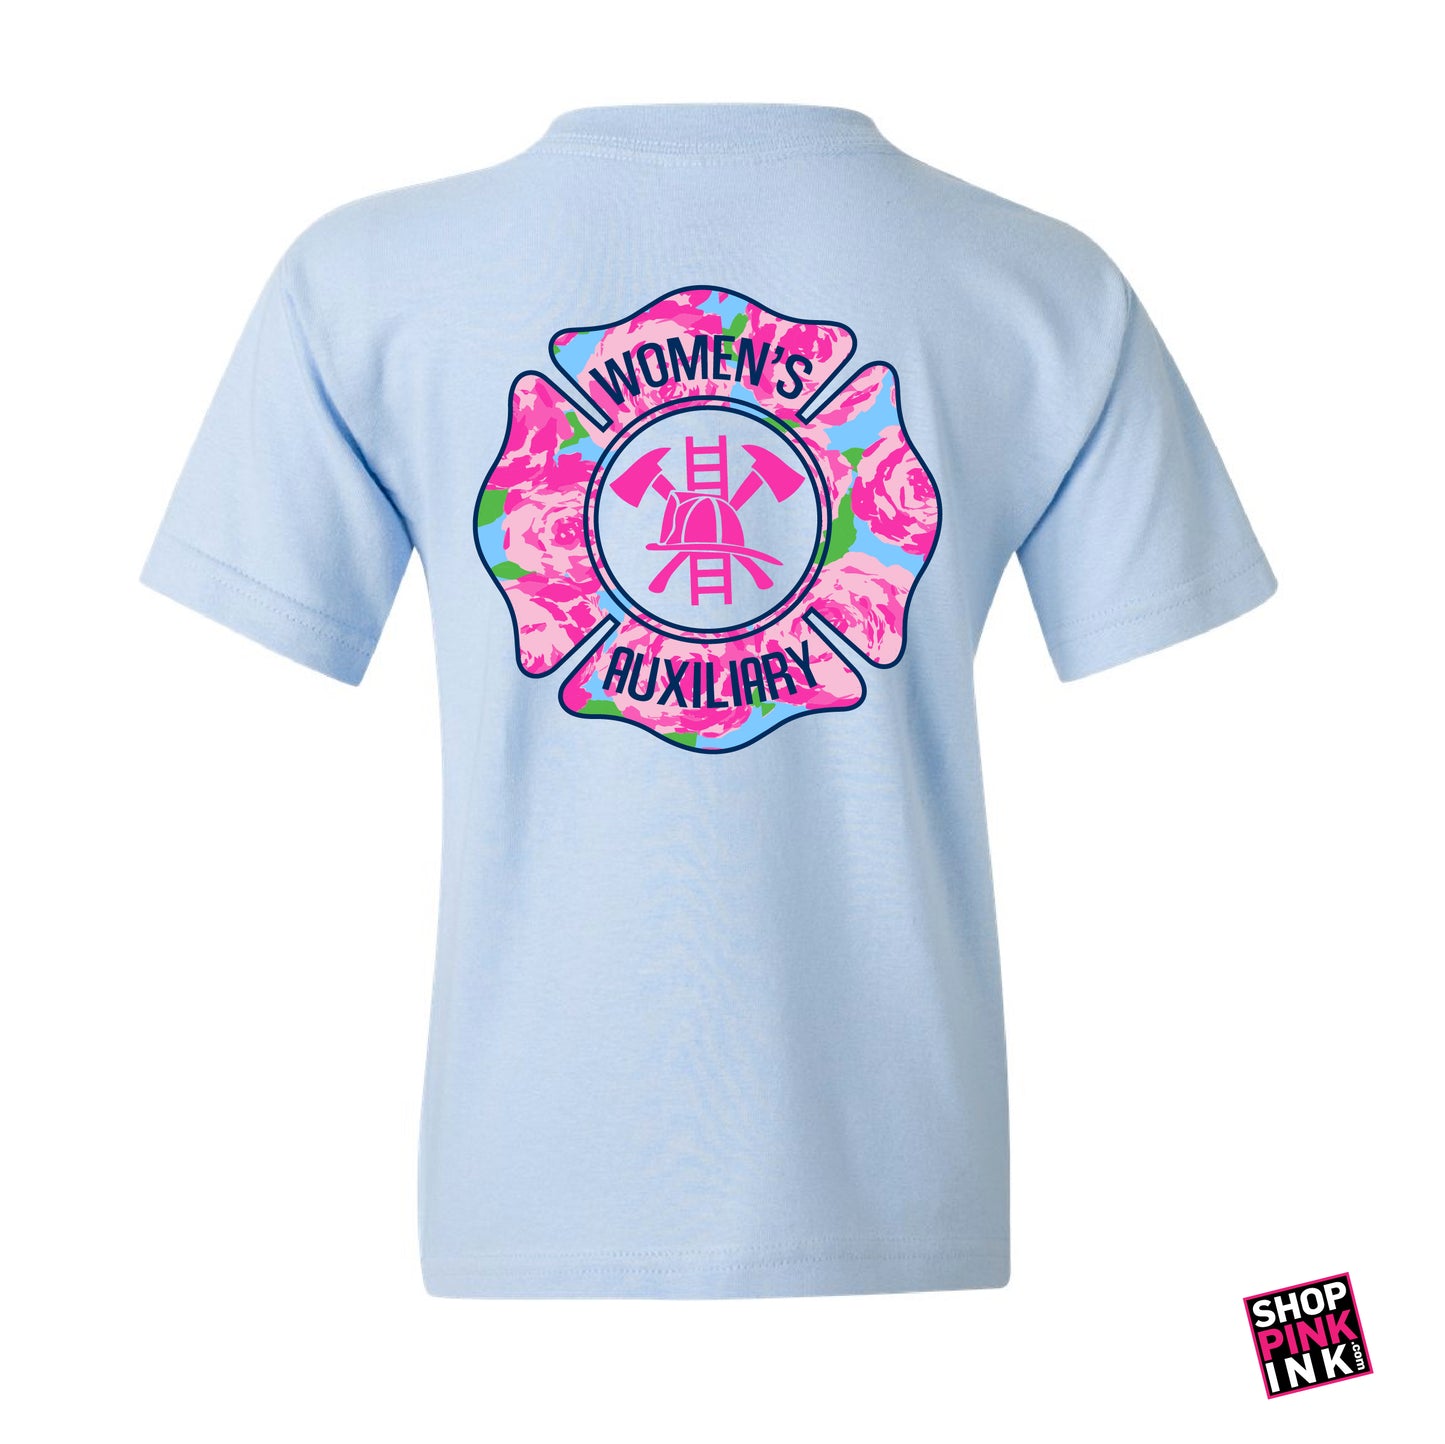 Jonesboro Firefighters Women's Auxiliary - Floral Maltese - Youth Short Sleeve - 22904